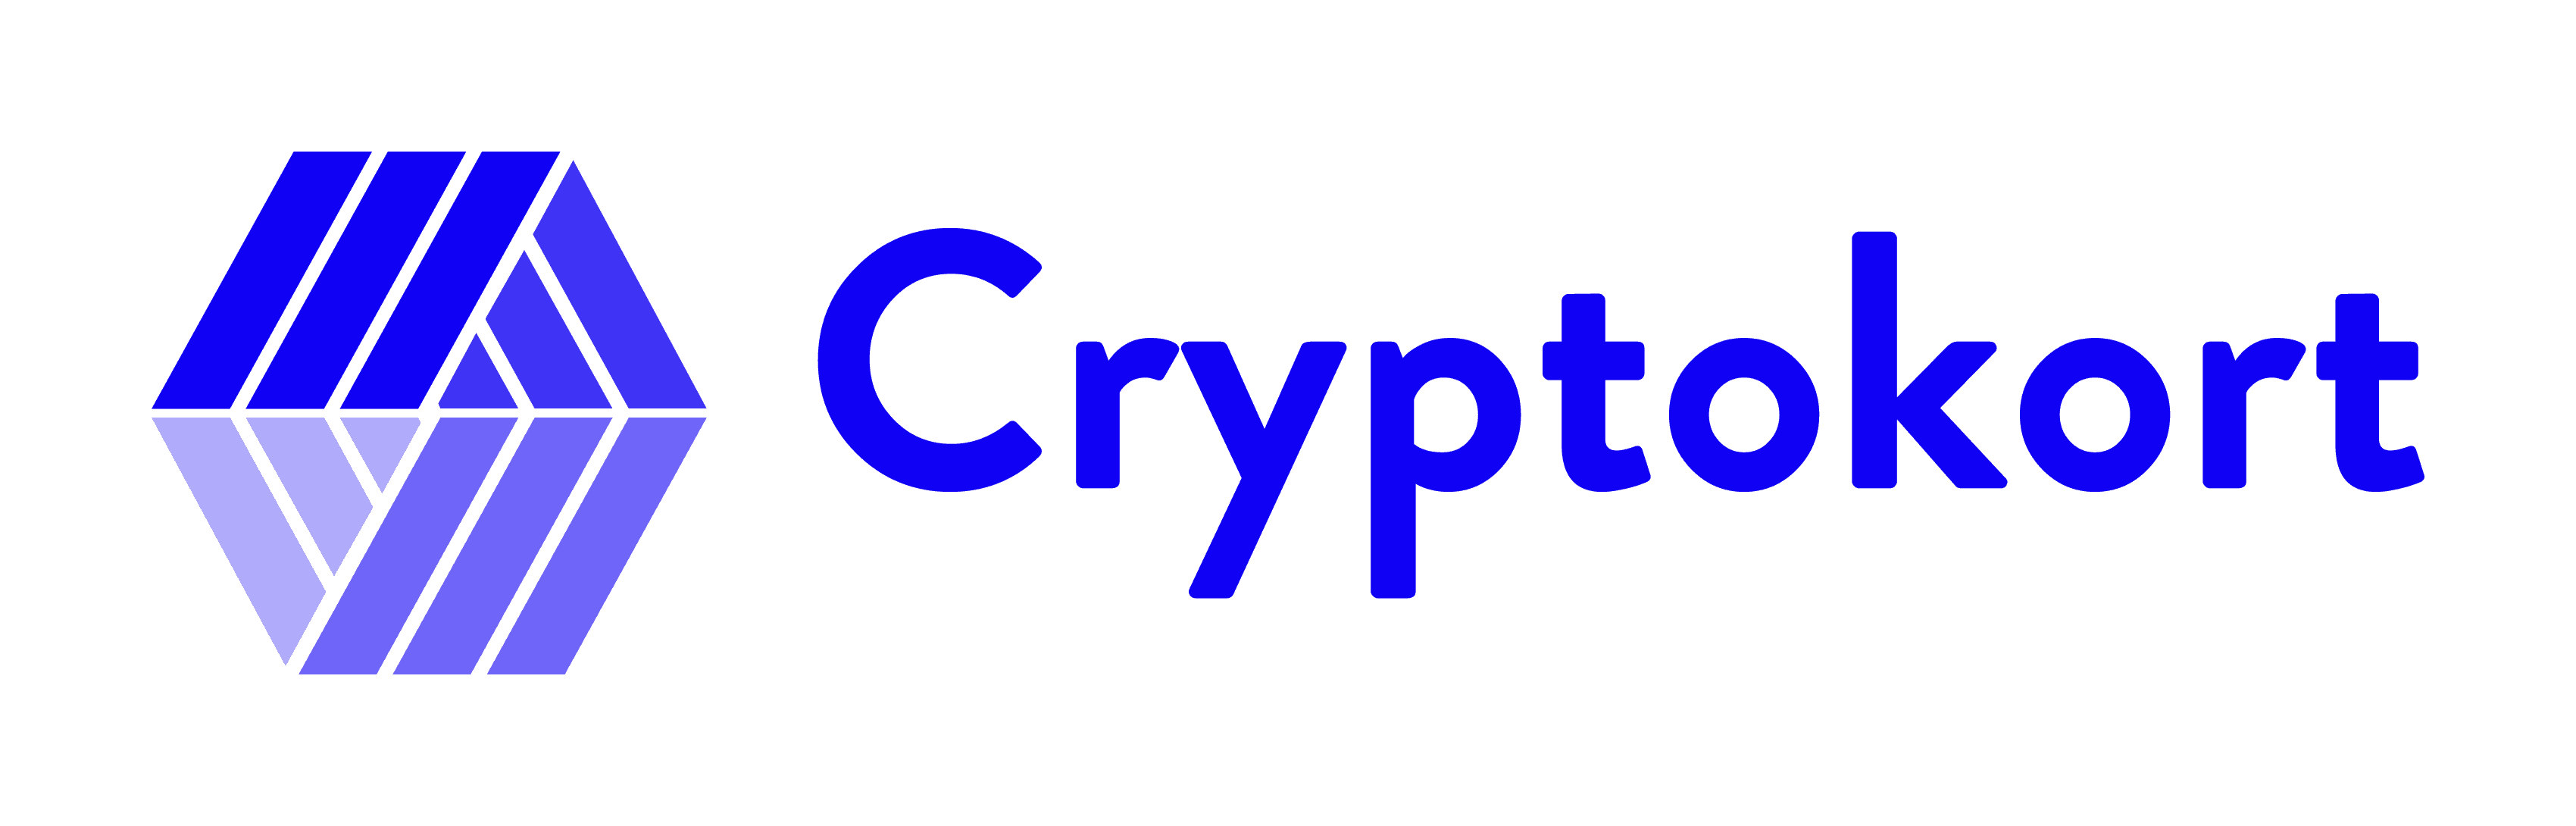 Cryptokort